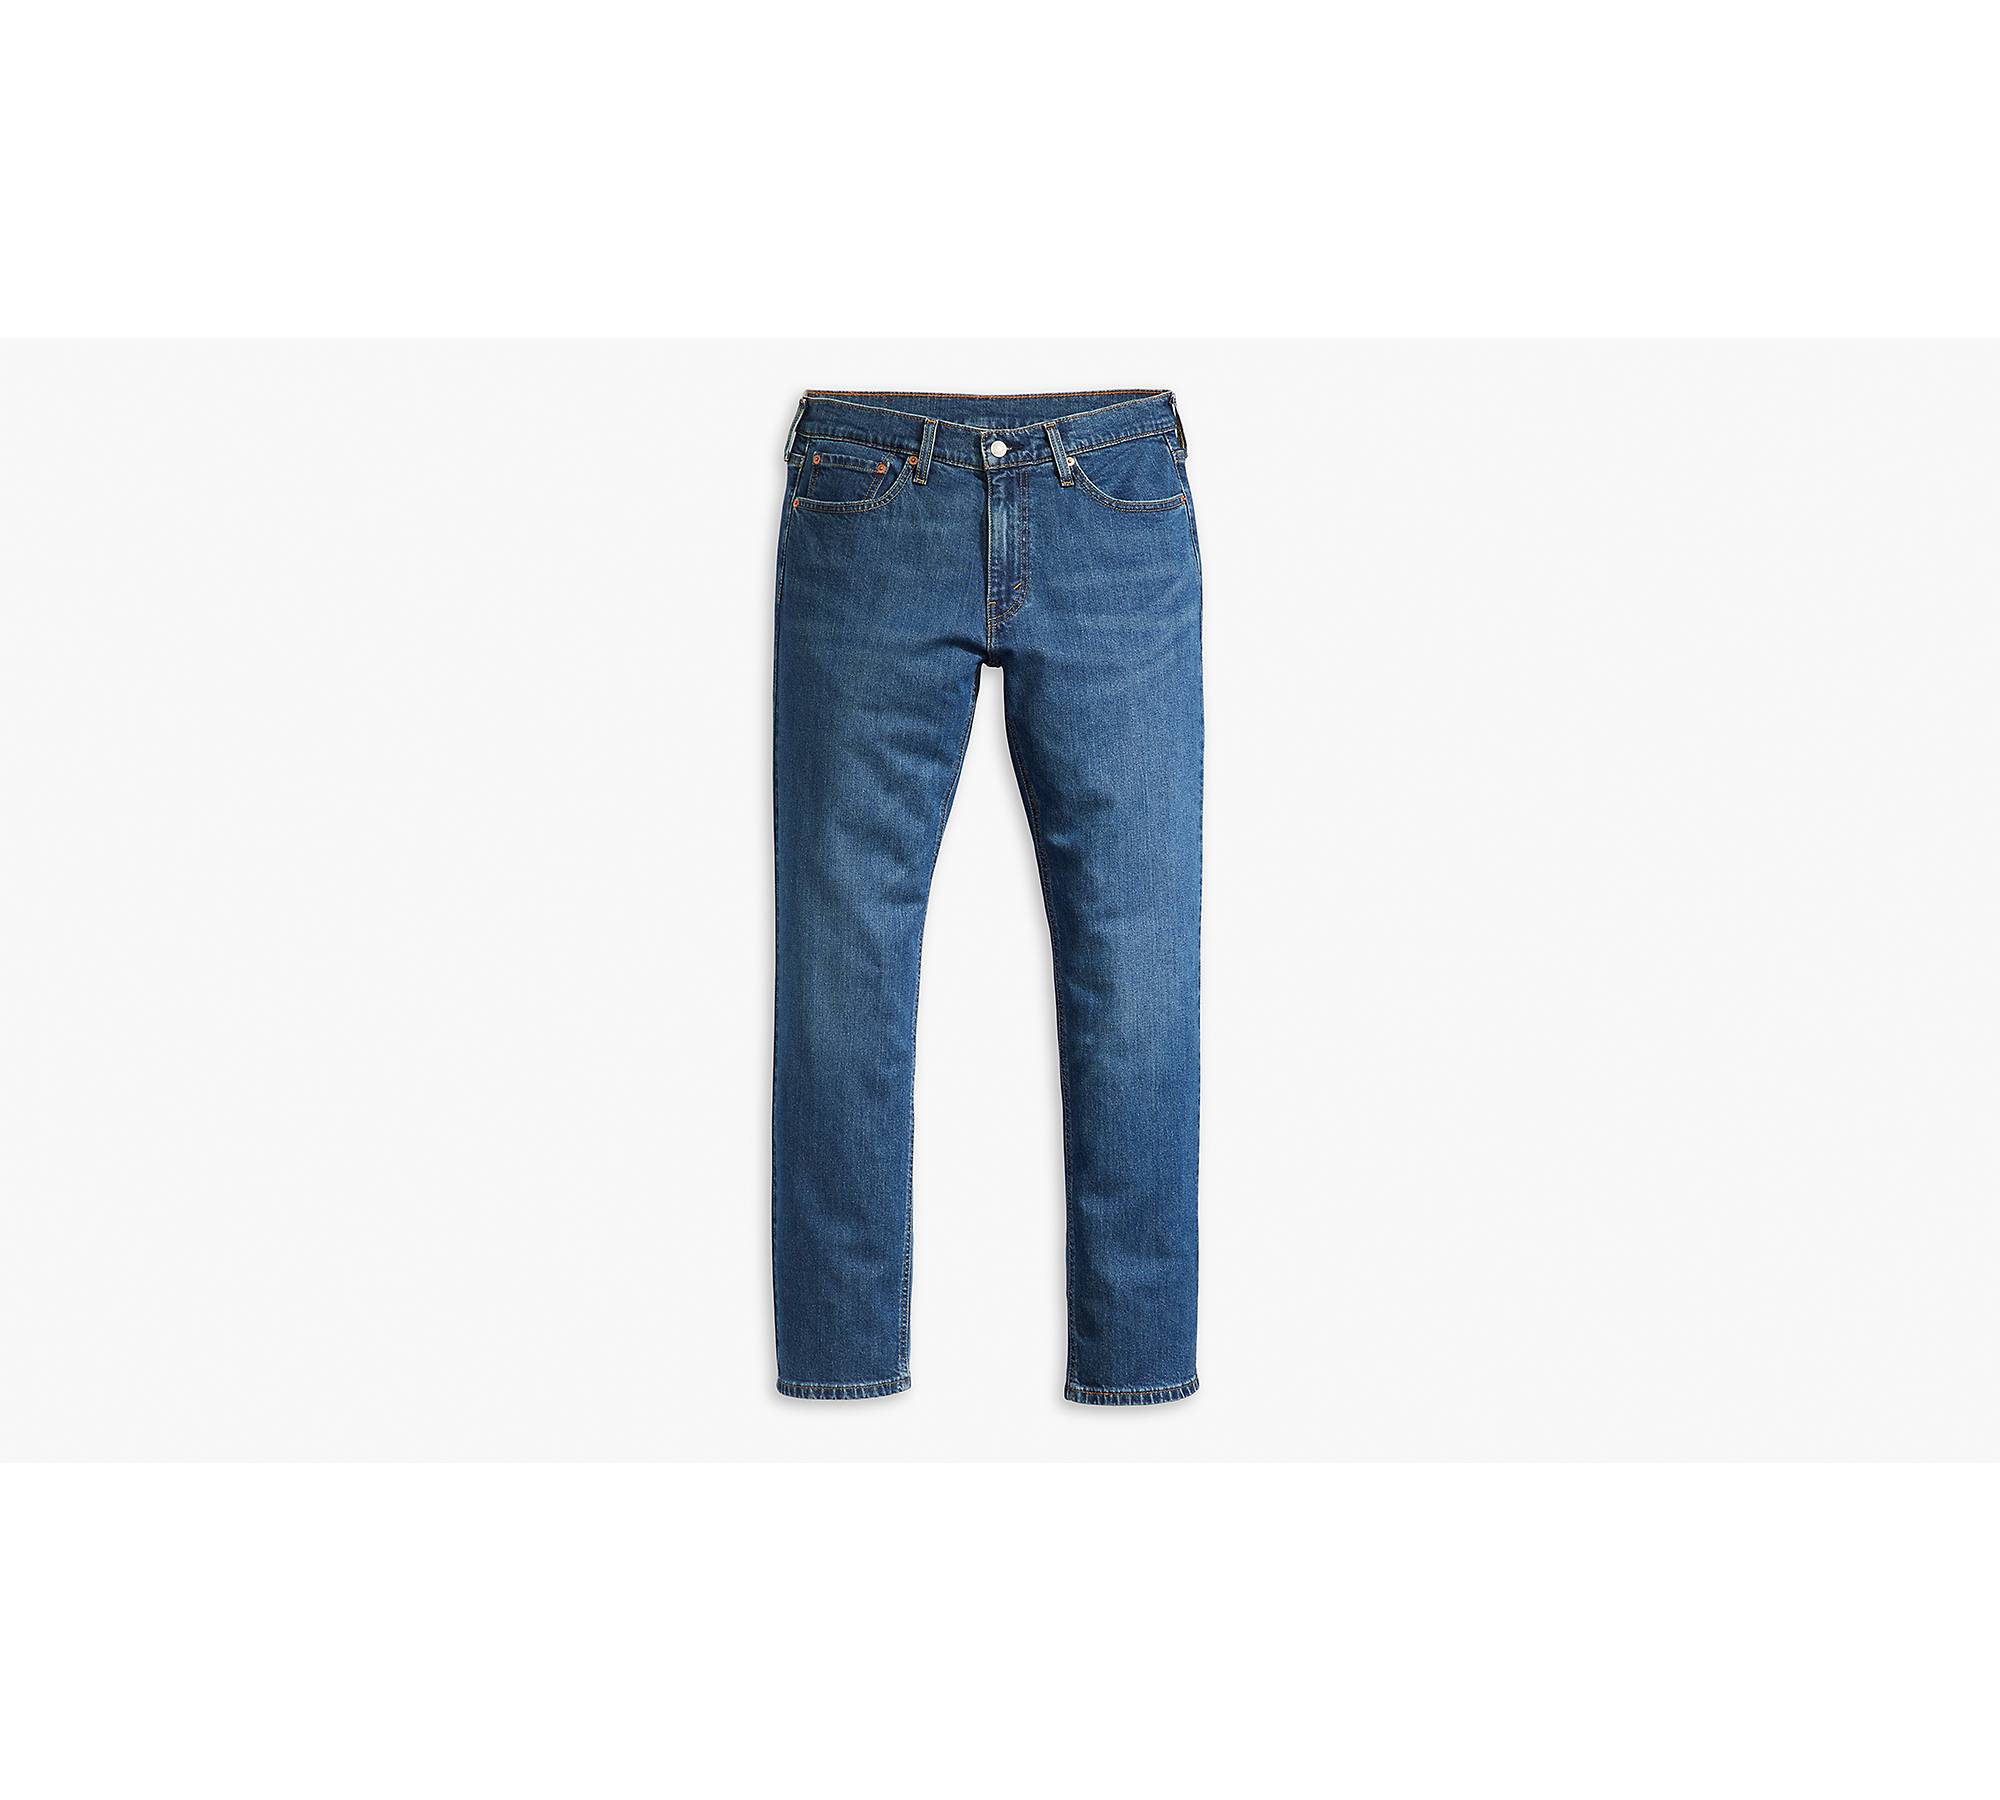 541™ Athletic Fit Jeans - Dark Wash